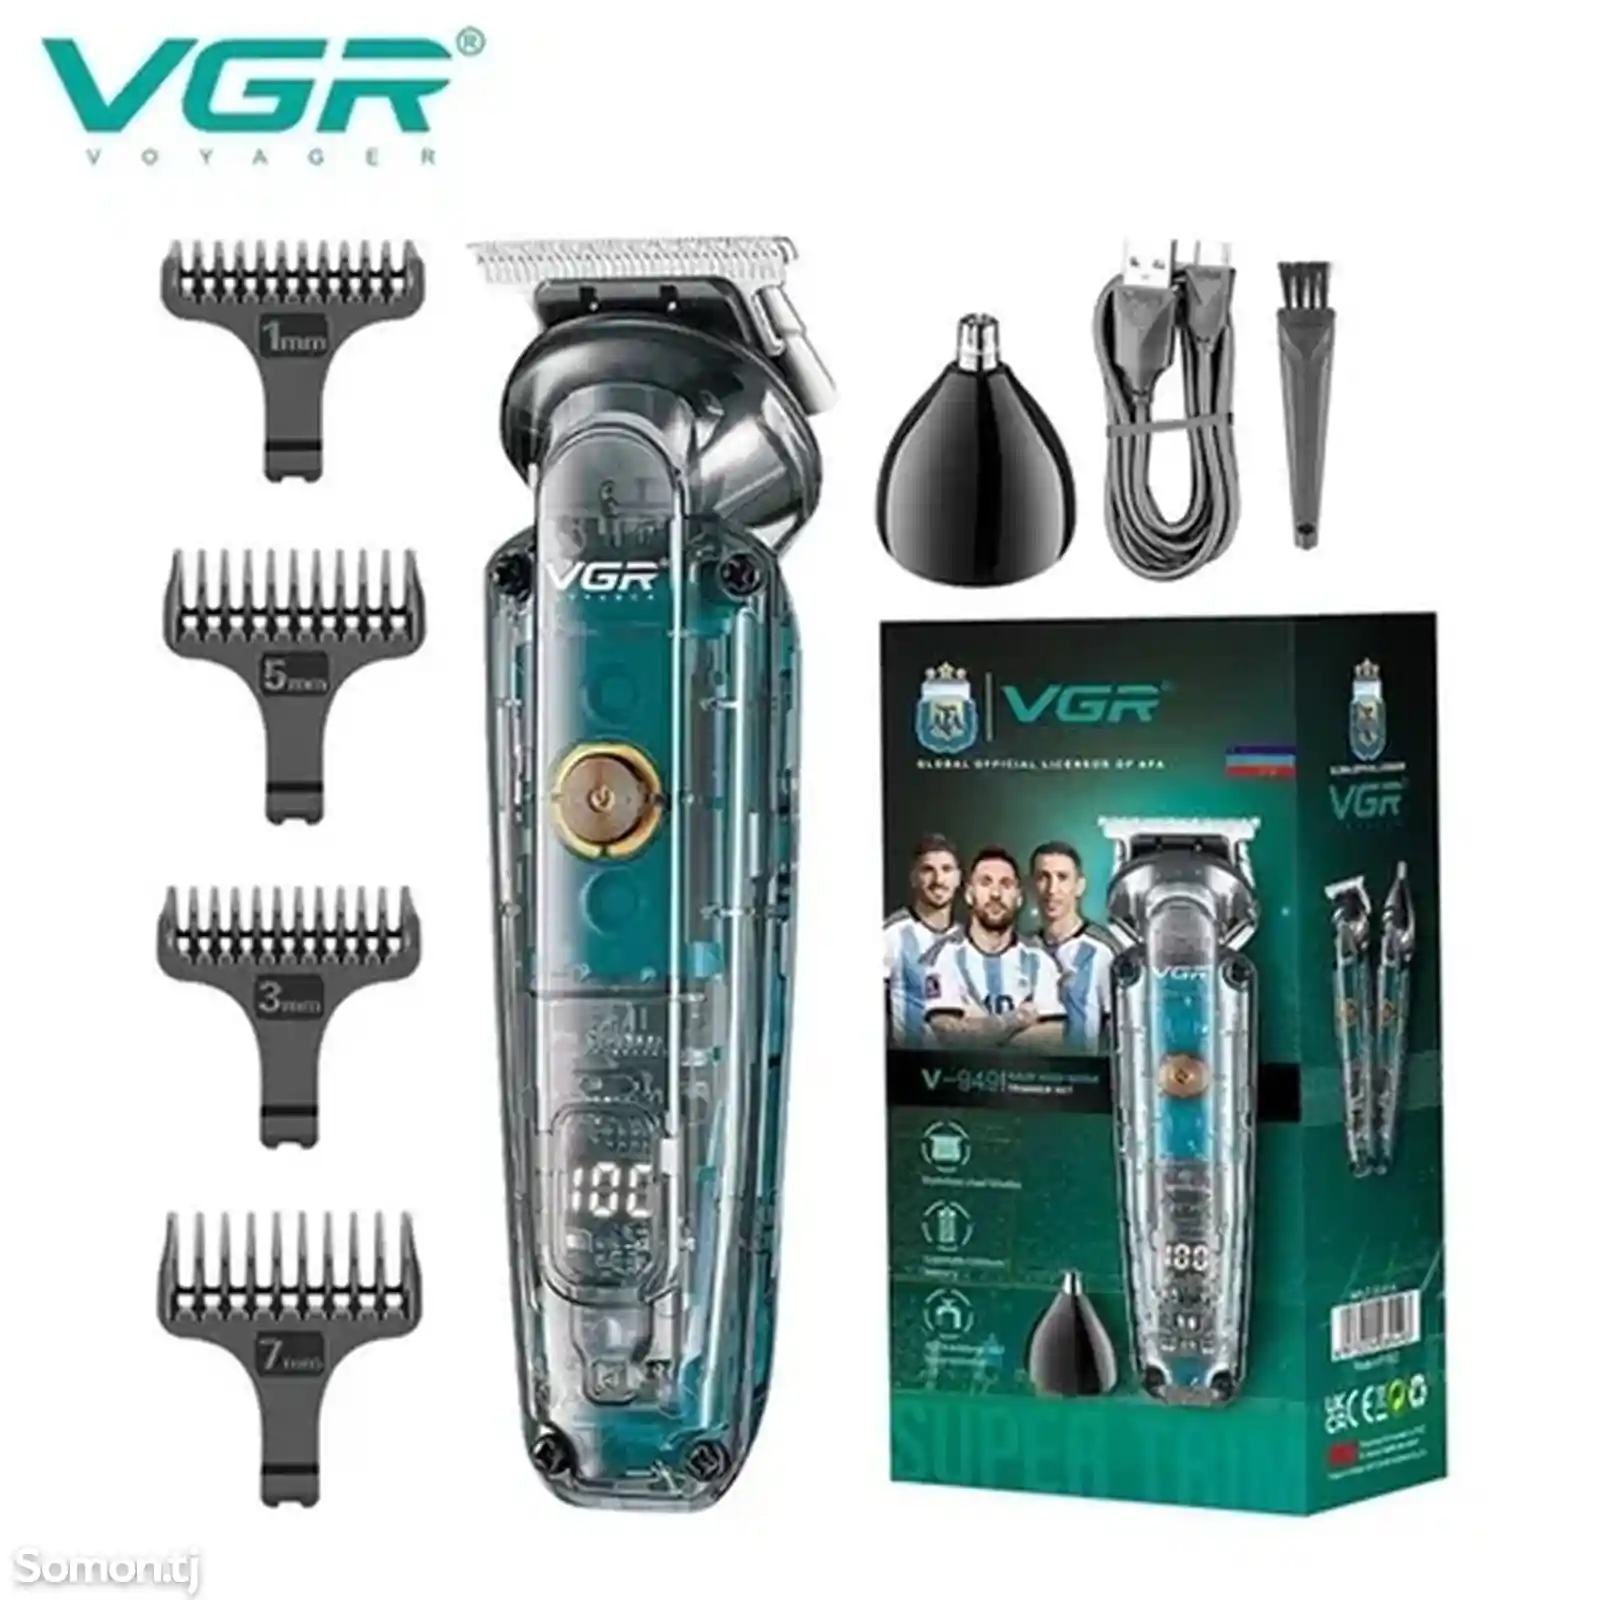 Триммер для волос VGR V-949-1